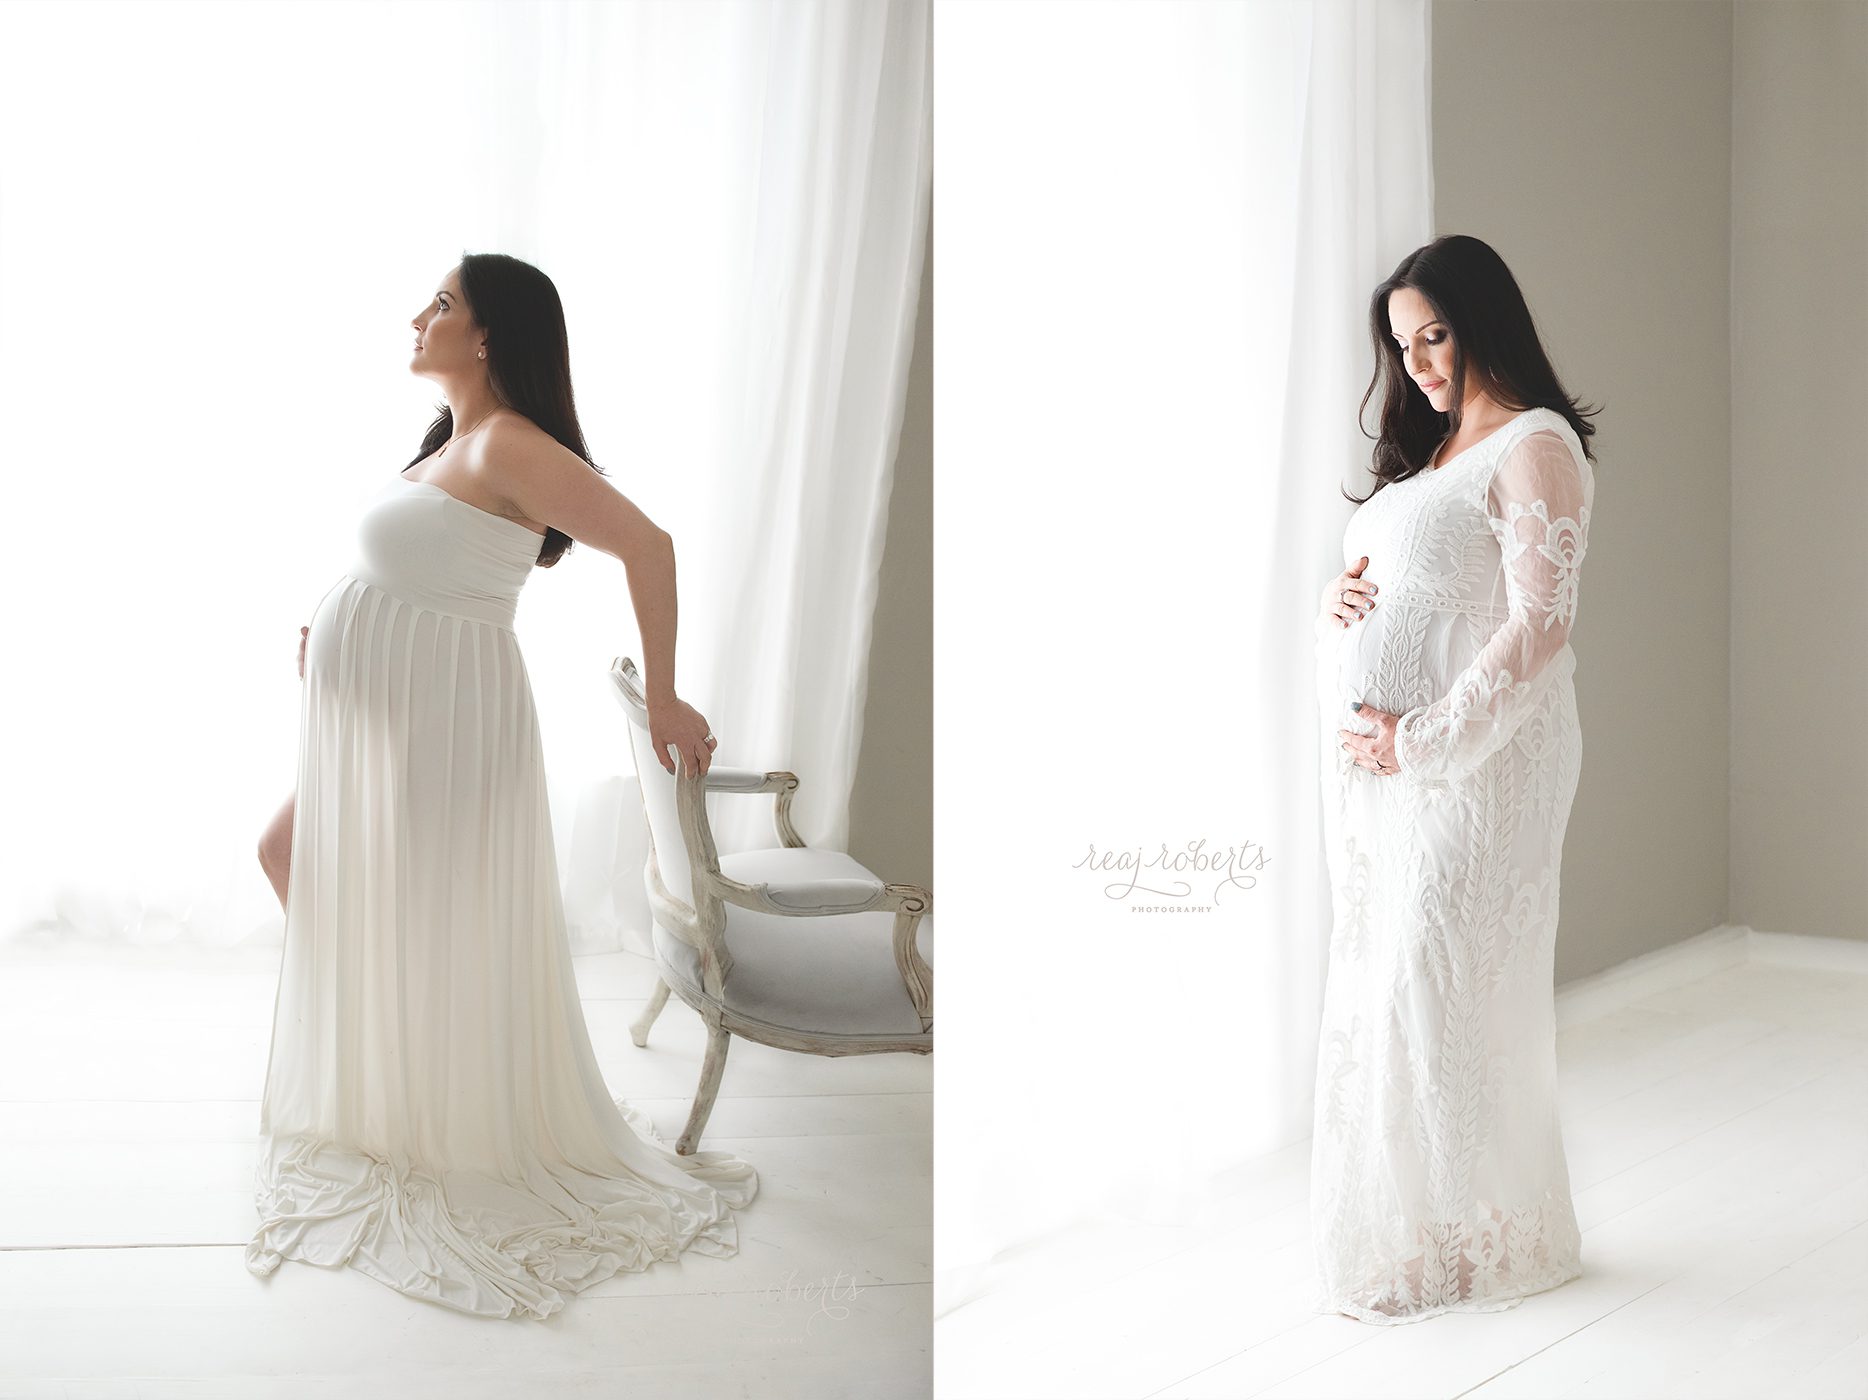 Professional Maternity Photography Studio Chandler, AZ | Reaj Roberts Photography